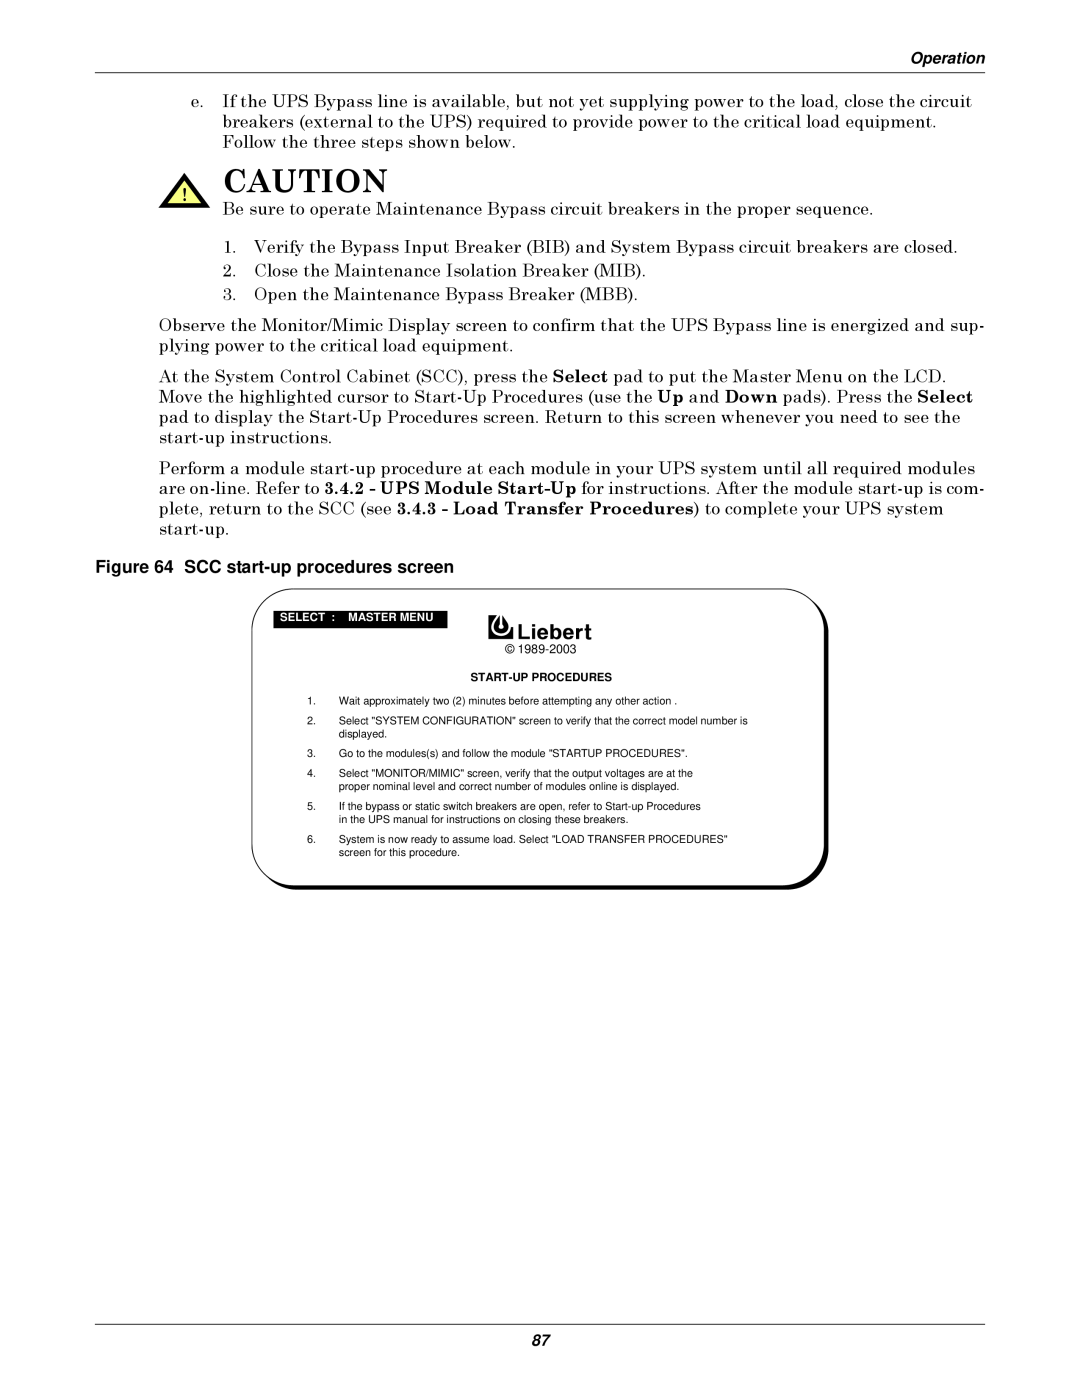 Emerson Series 610 manual SCC start-up procedures screen 